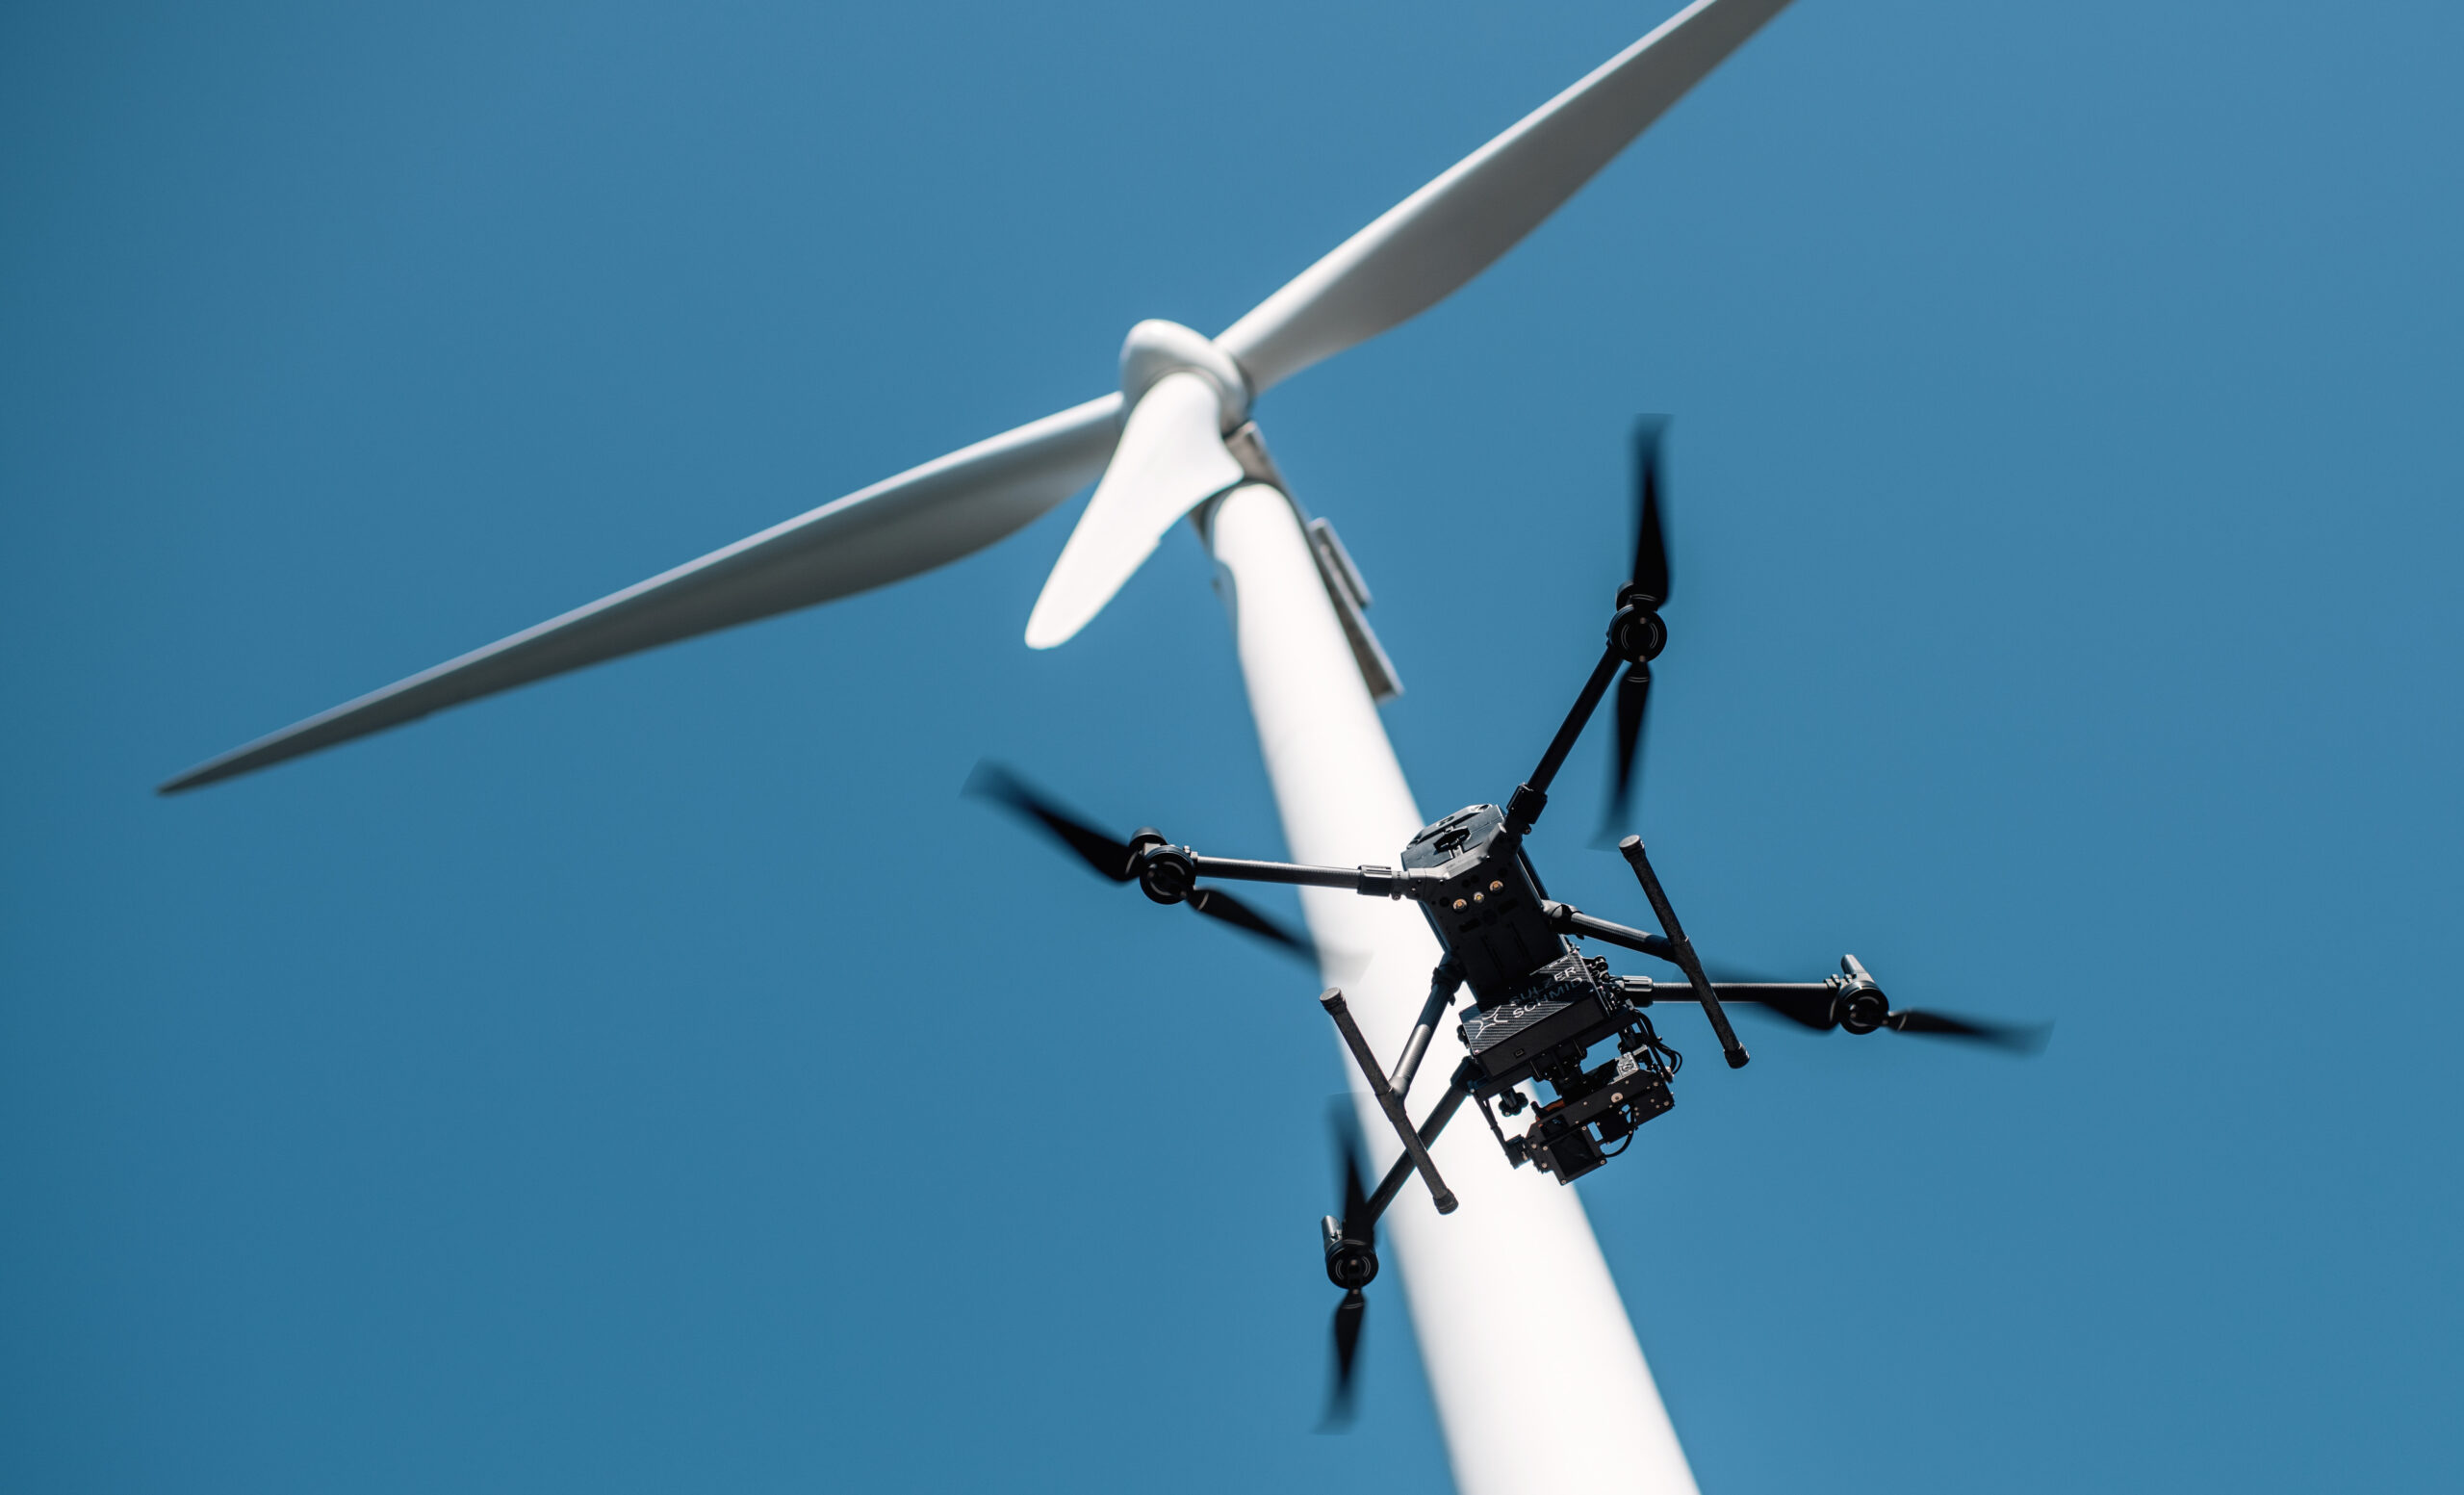 Drone based wind turbine inspection platform